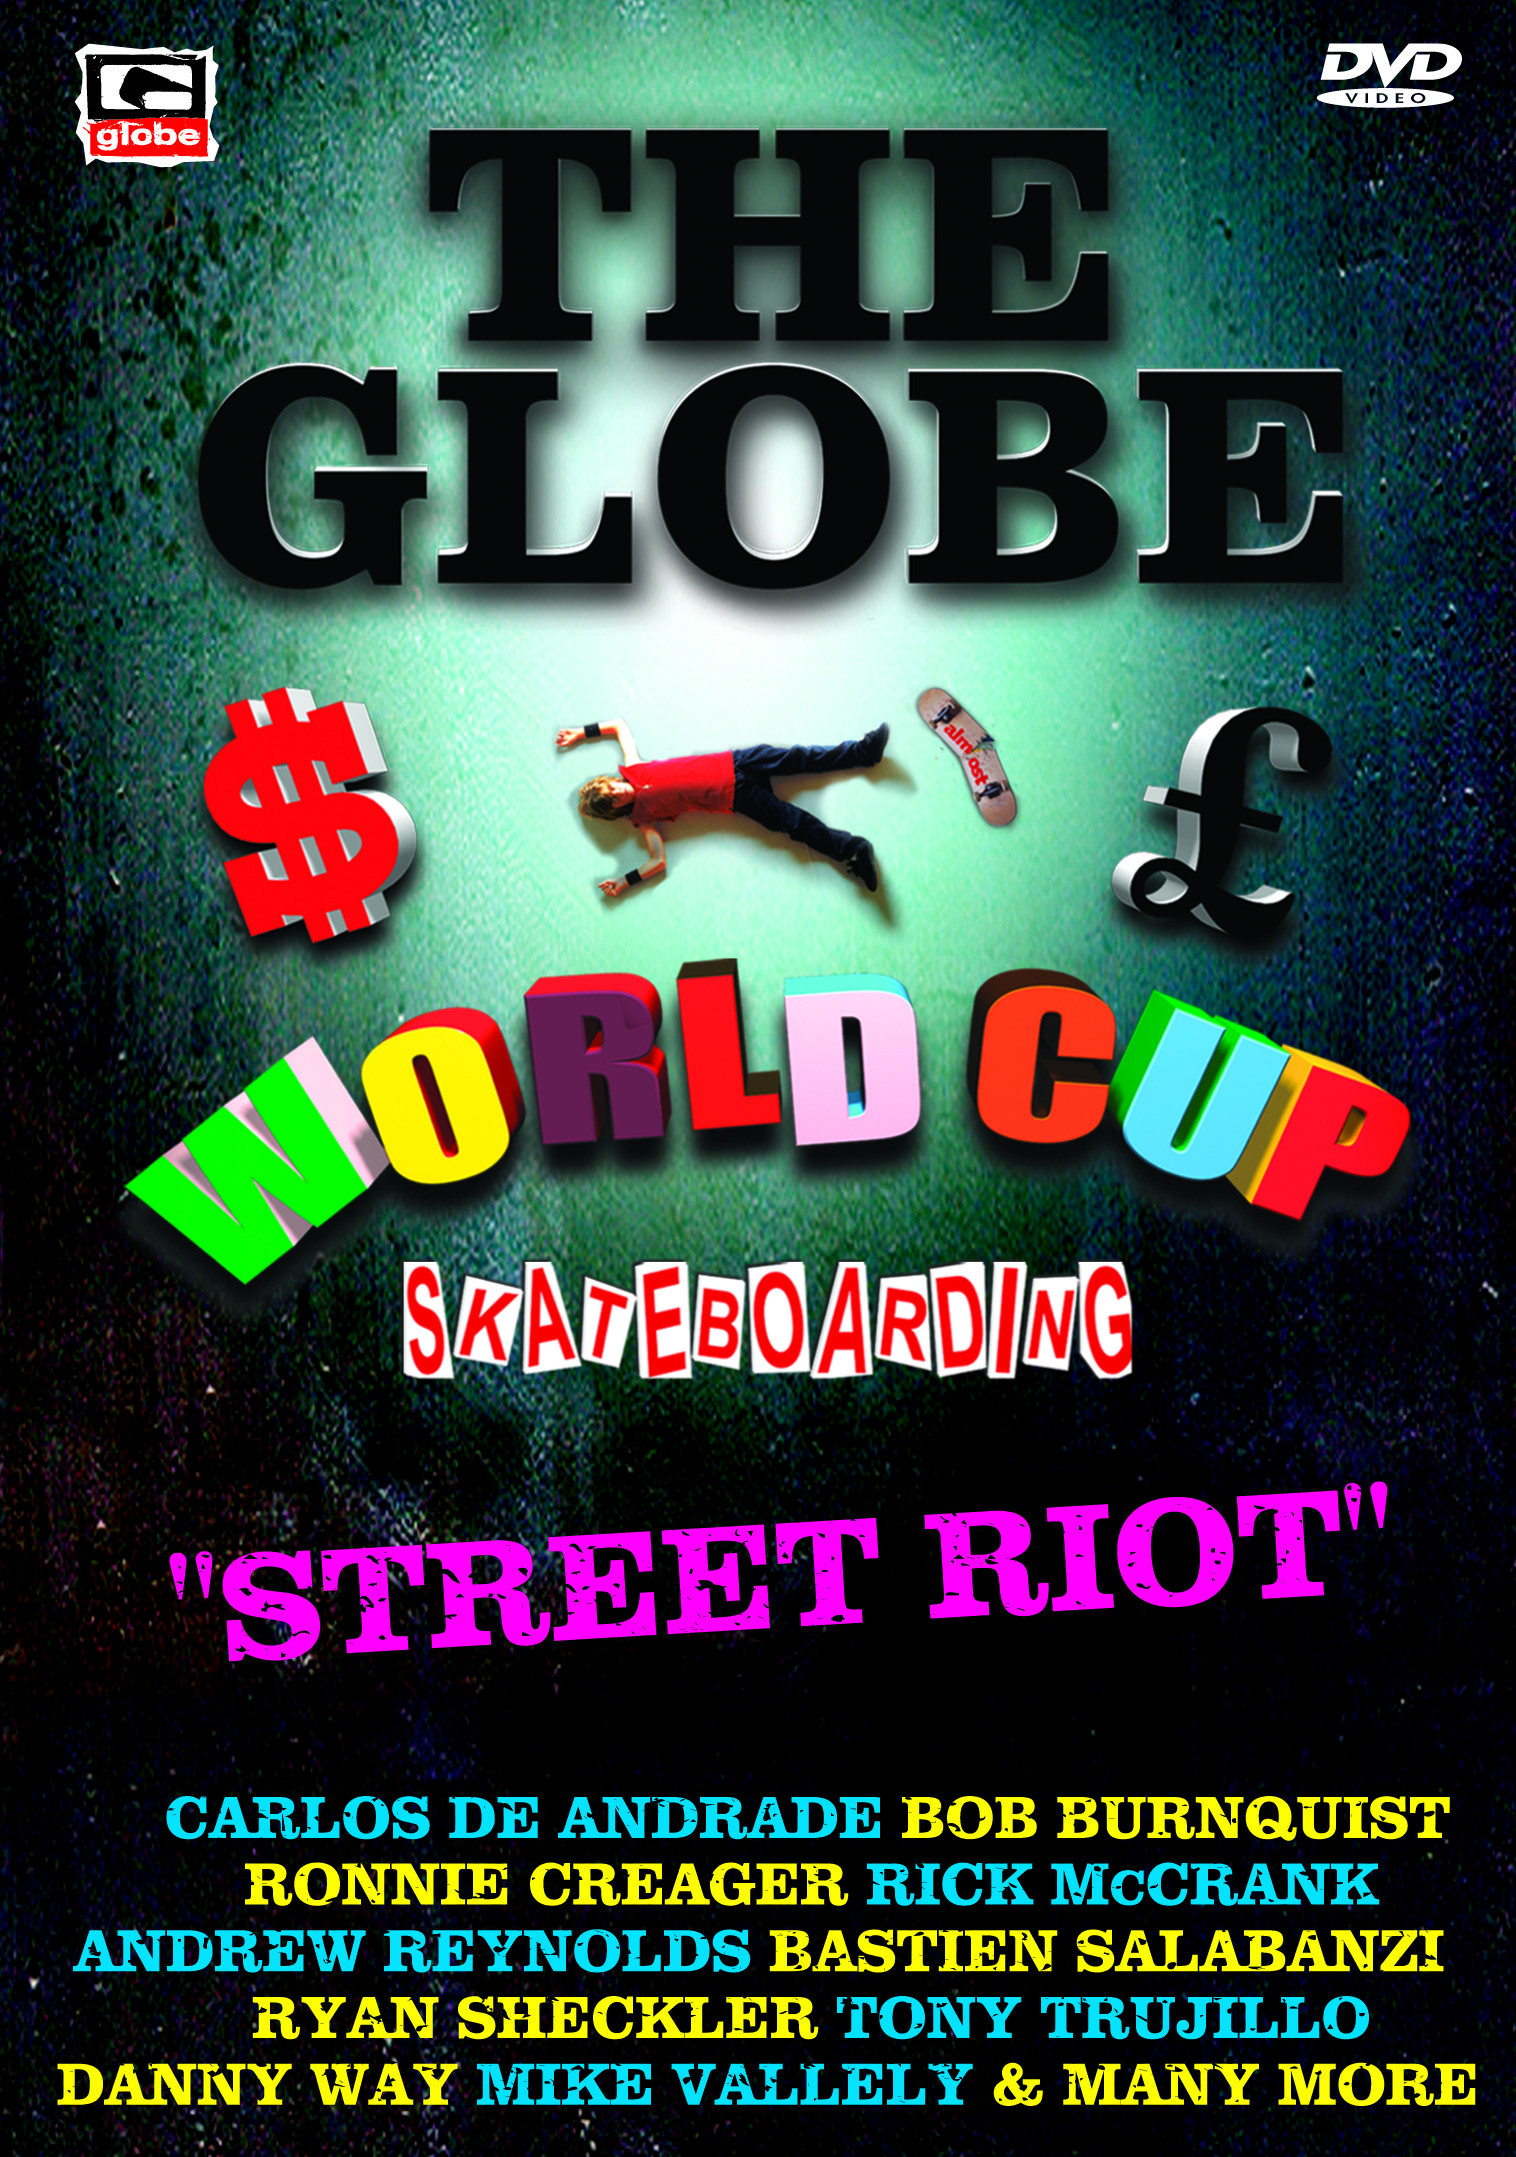 World Cup Skateboarding 2004: Street Riot by Globe Skateboards video cover